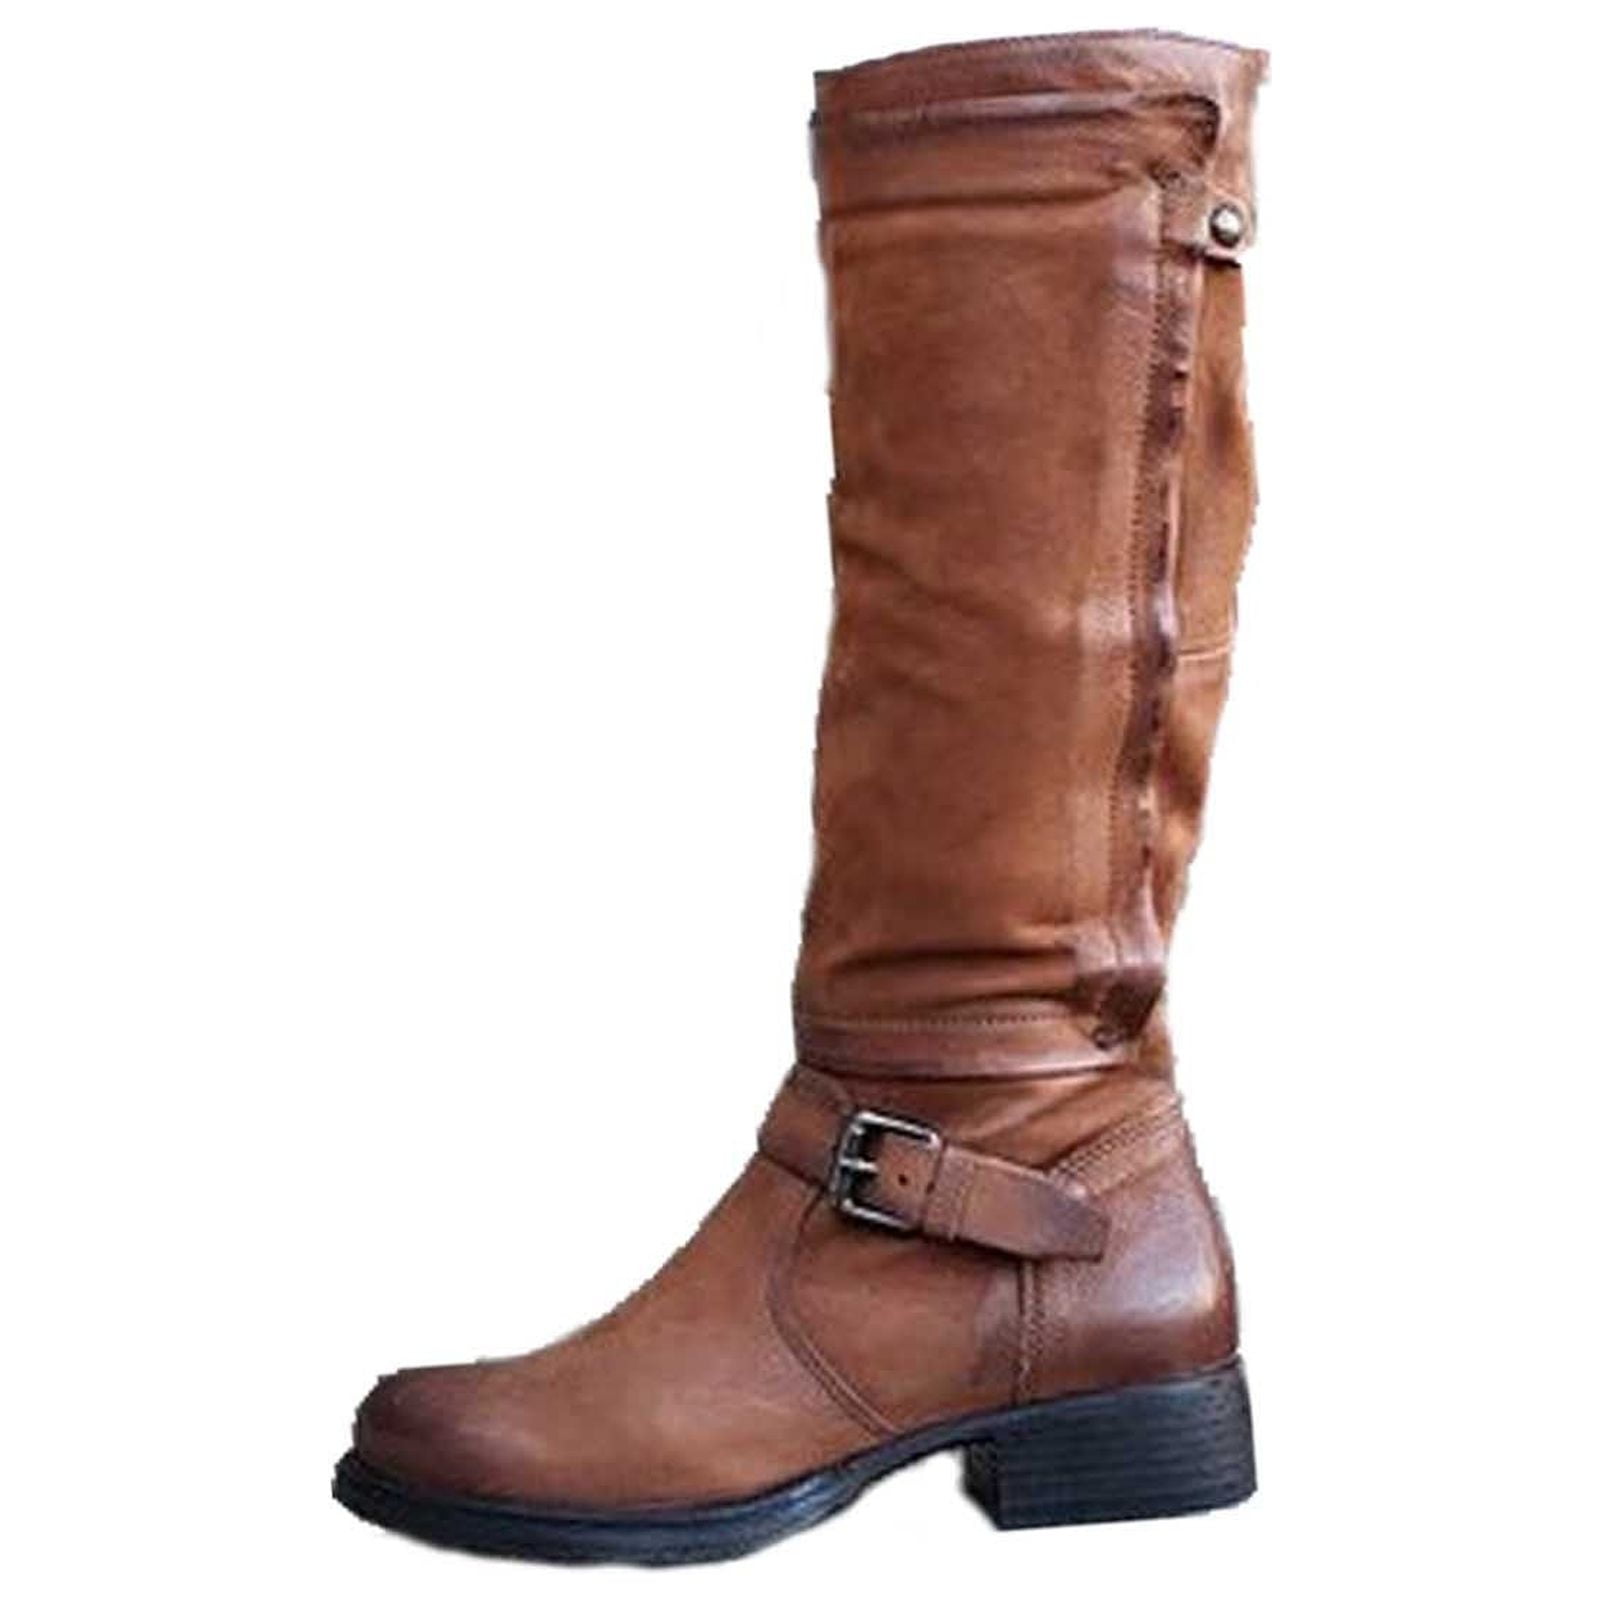 Women's Redfoot Foldology Foldable Rain Boots, Durable, Warm, Light Fleece  Lined, Like New, Size: 9 for Sale in Centralia, WA - OfferUp